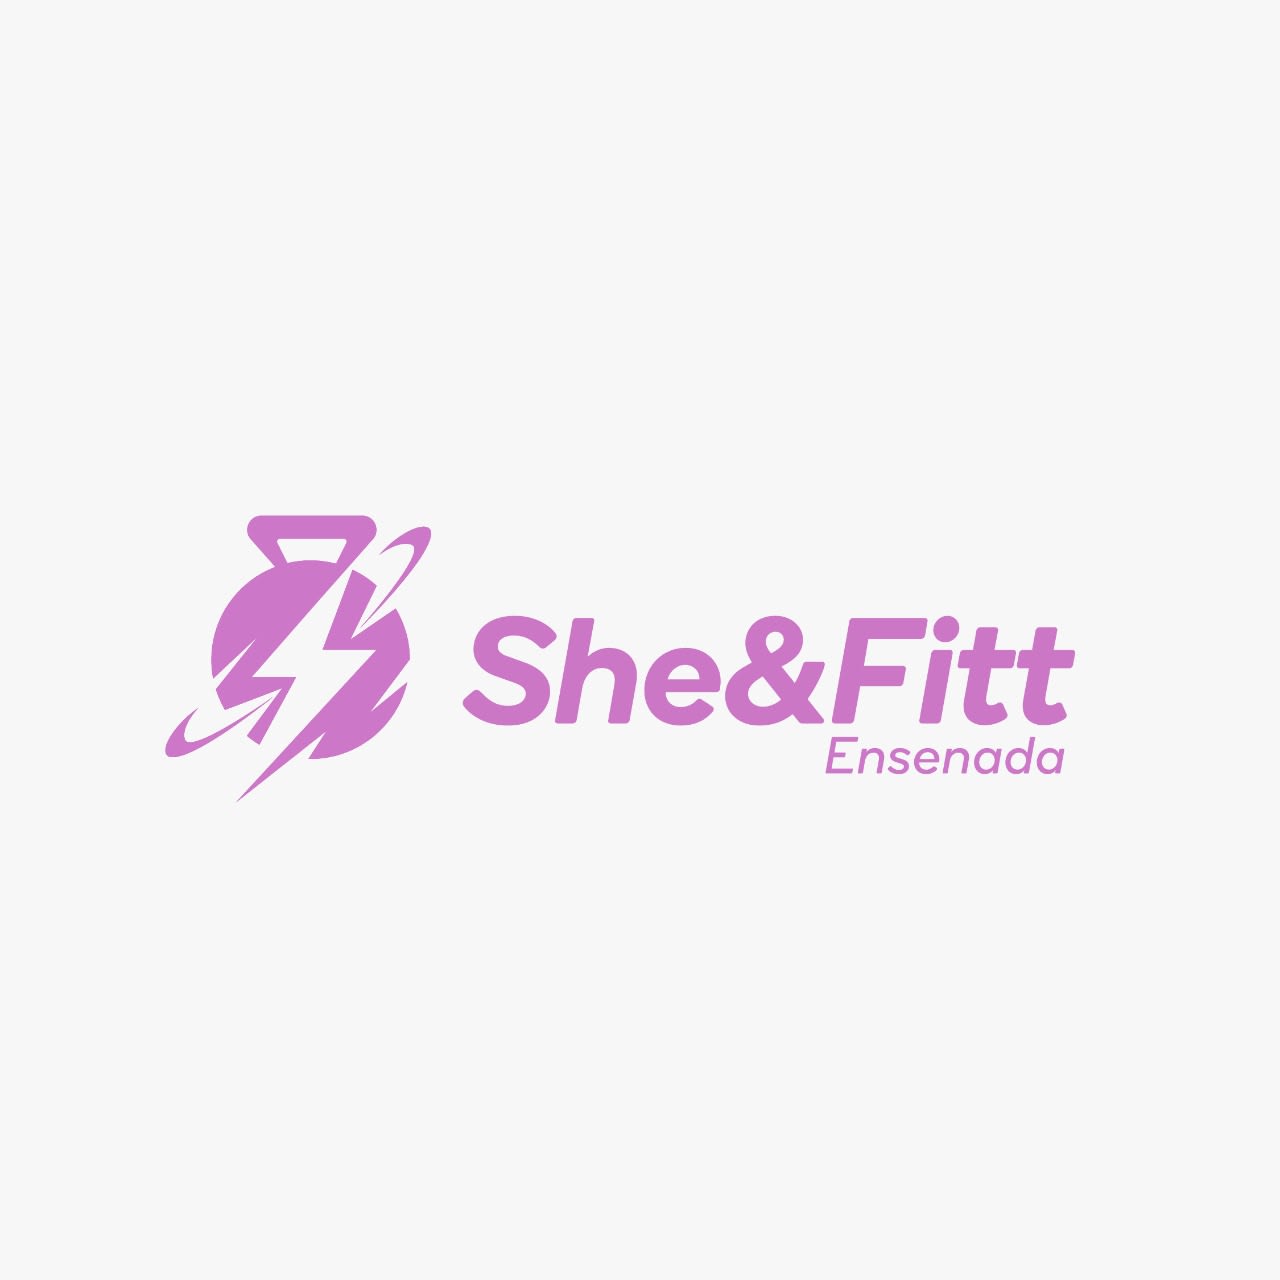 She&Fitt Ensenada